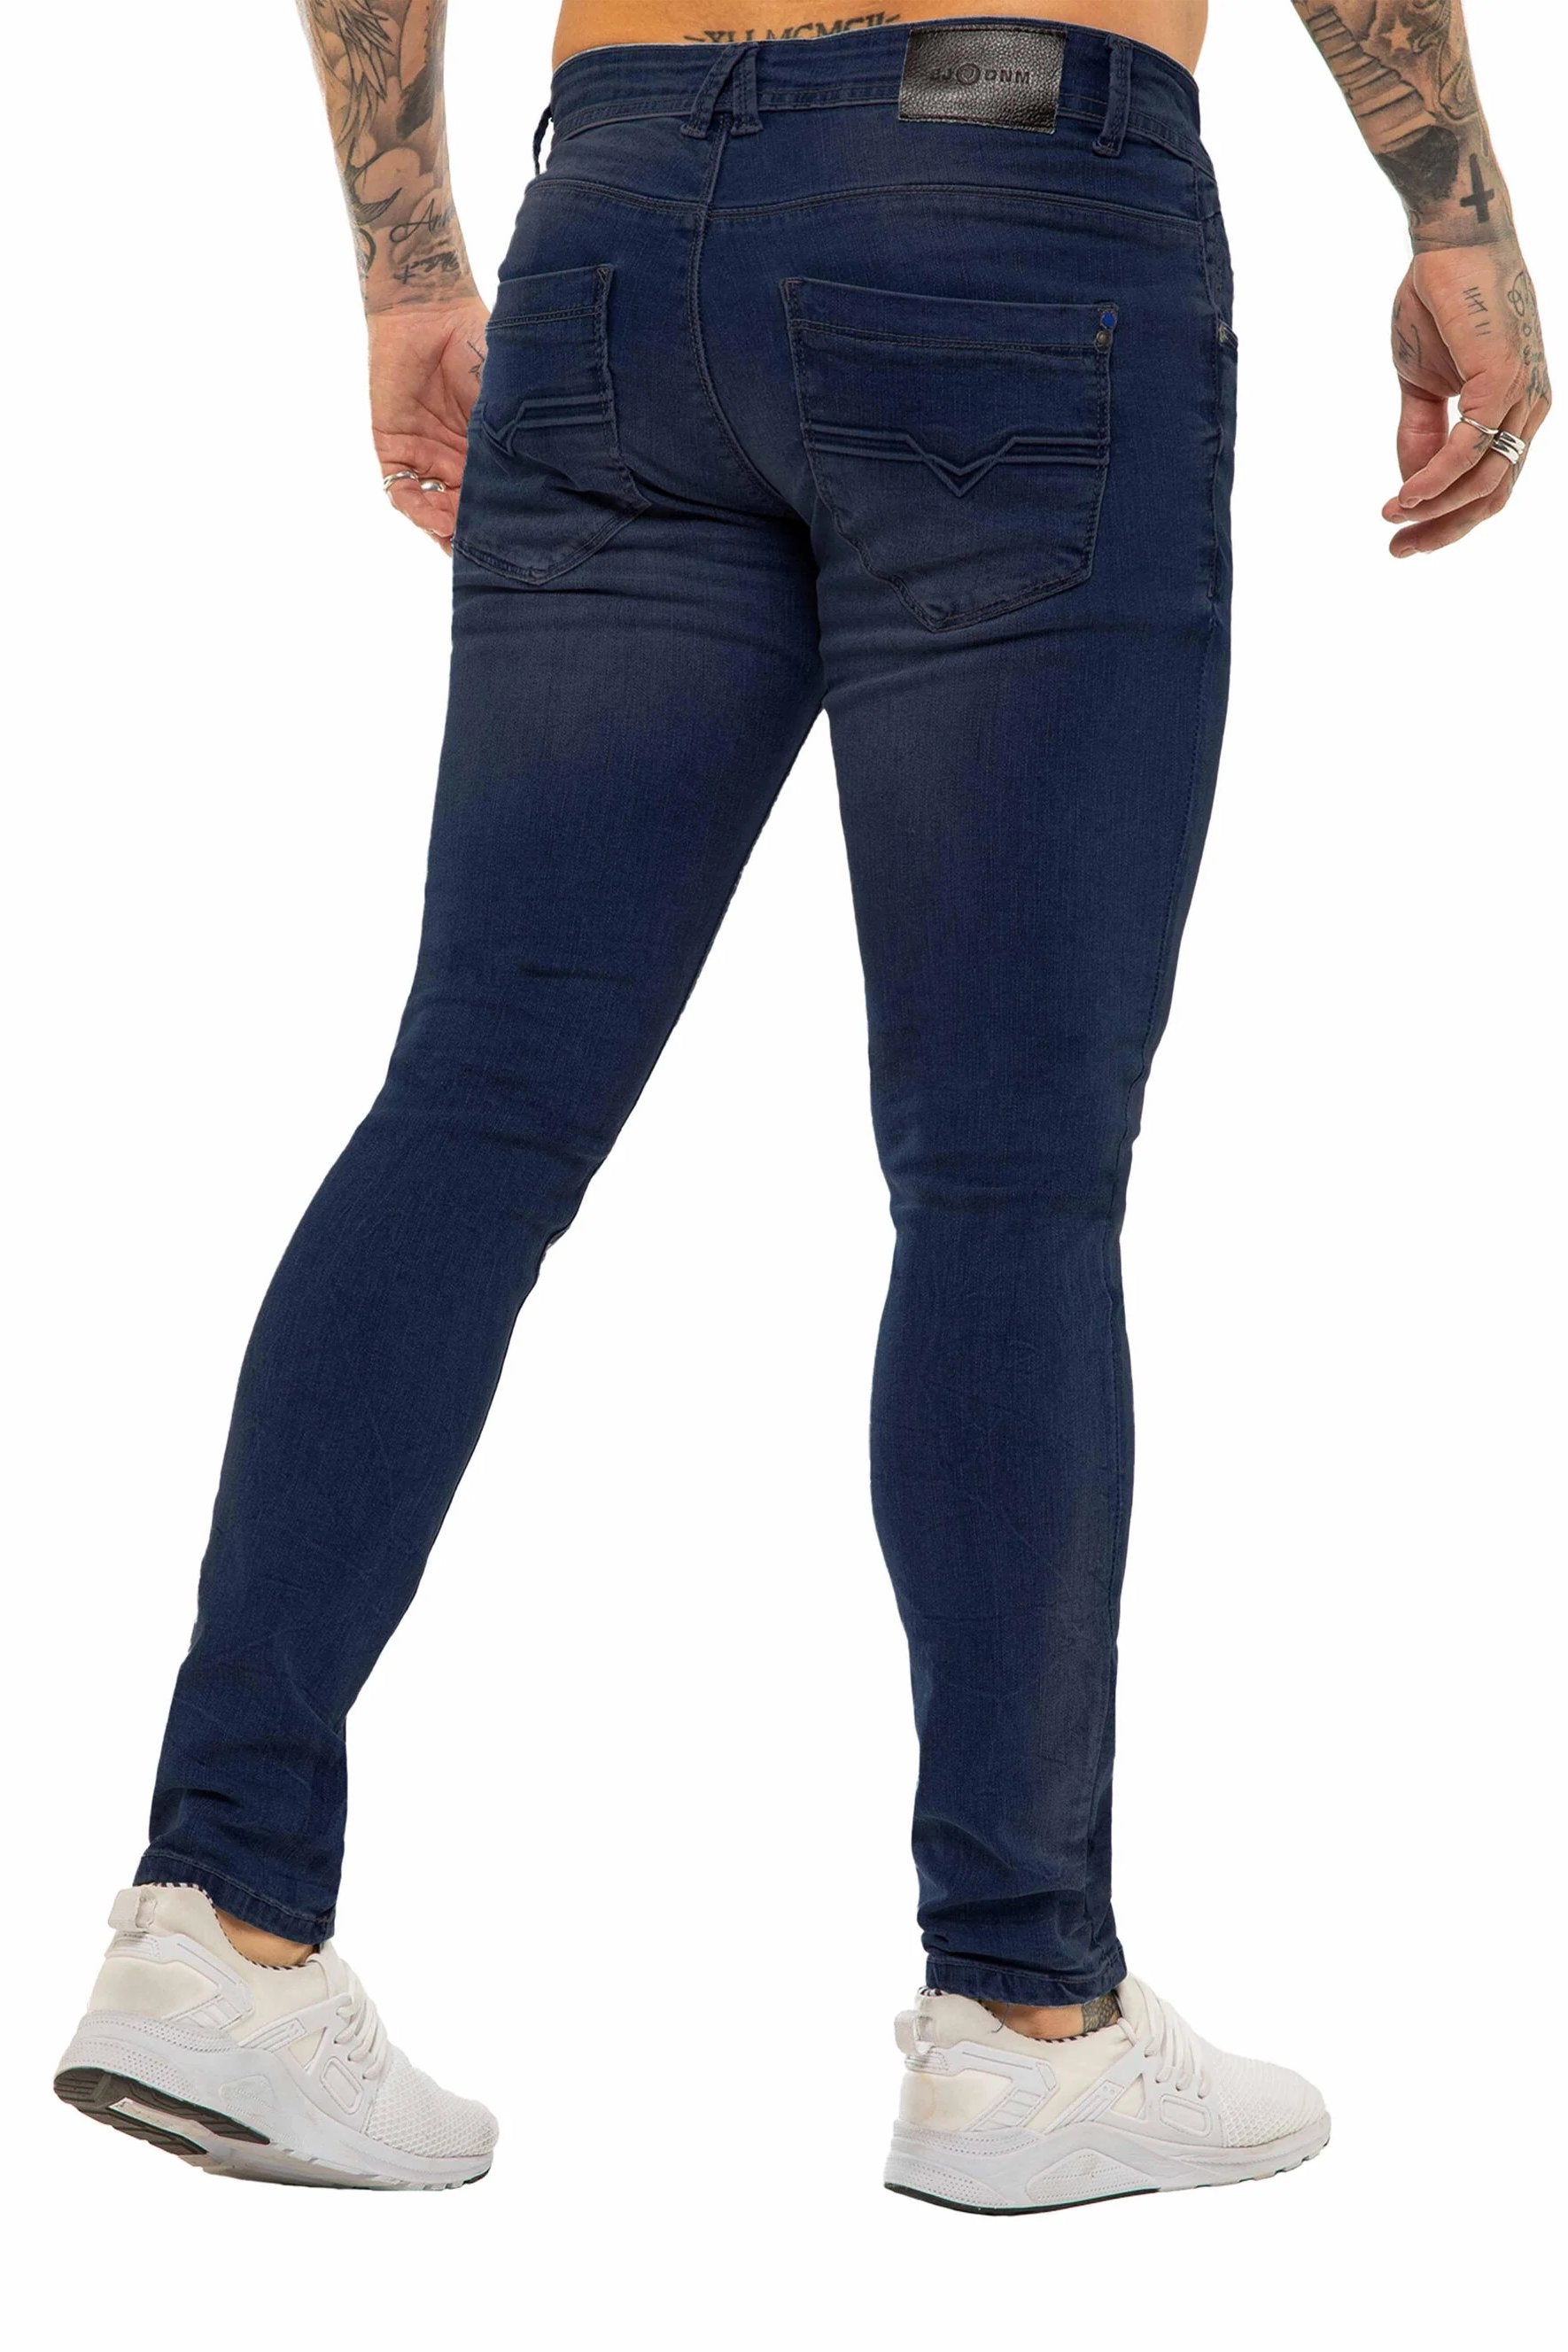 EM624 New Blue Slim Fit Stretch Men's Jean